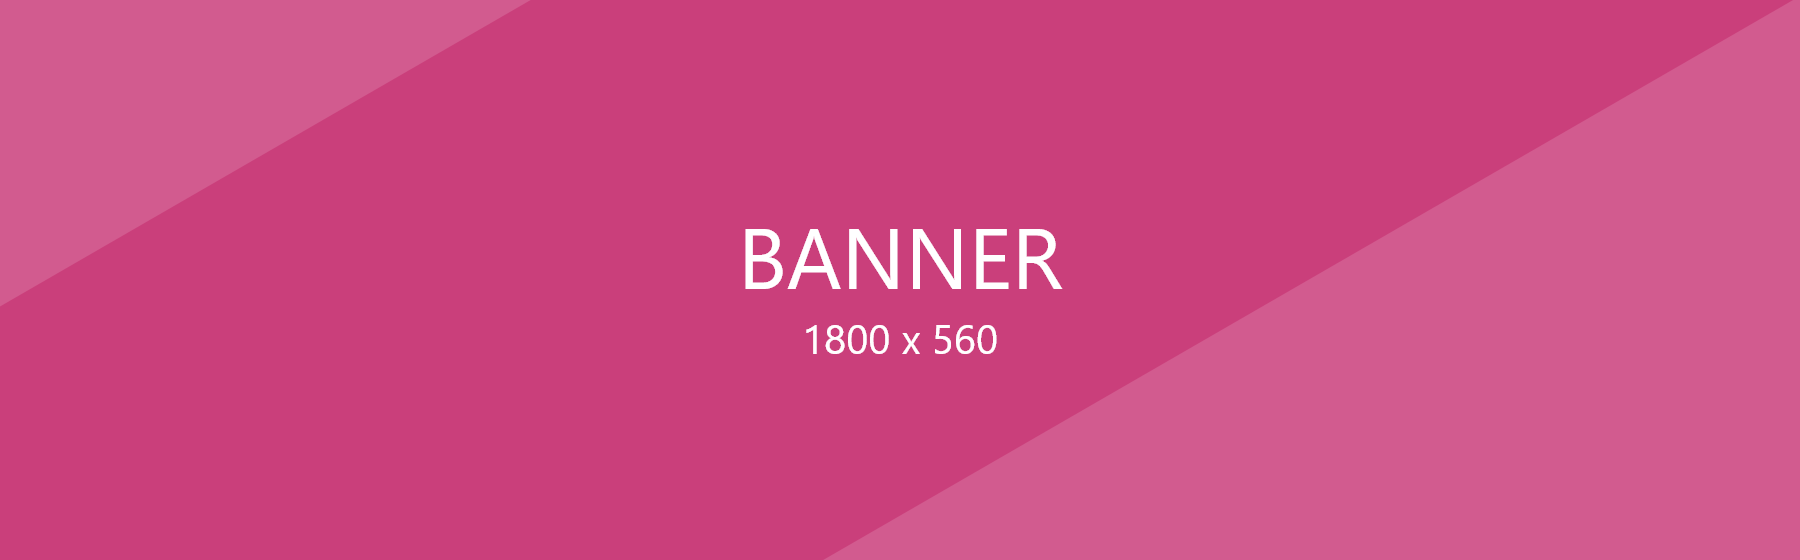 banner 1